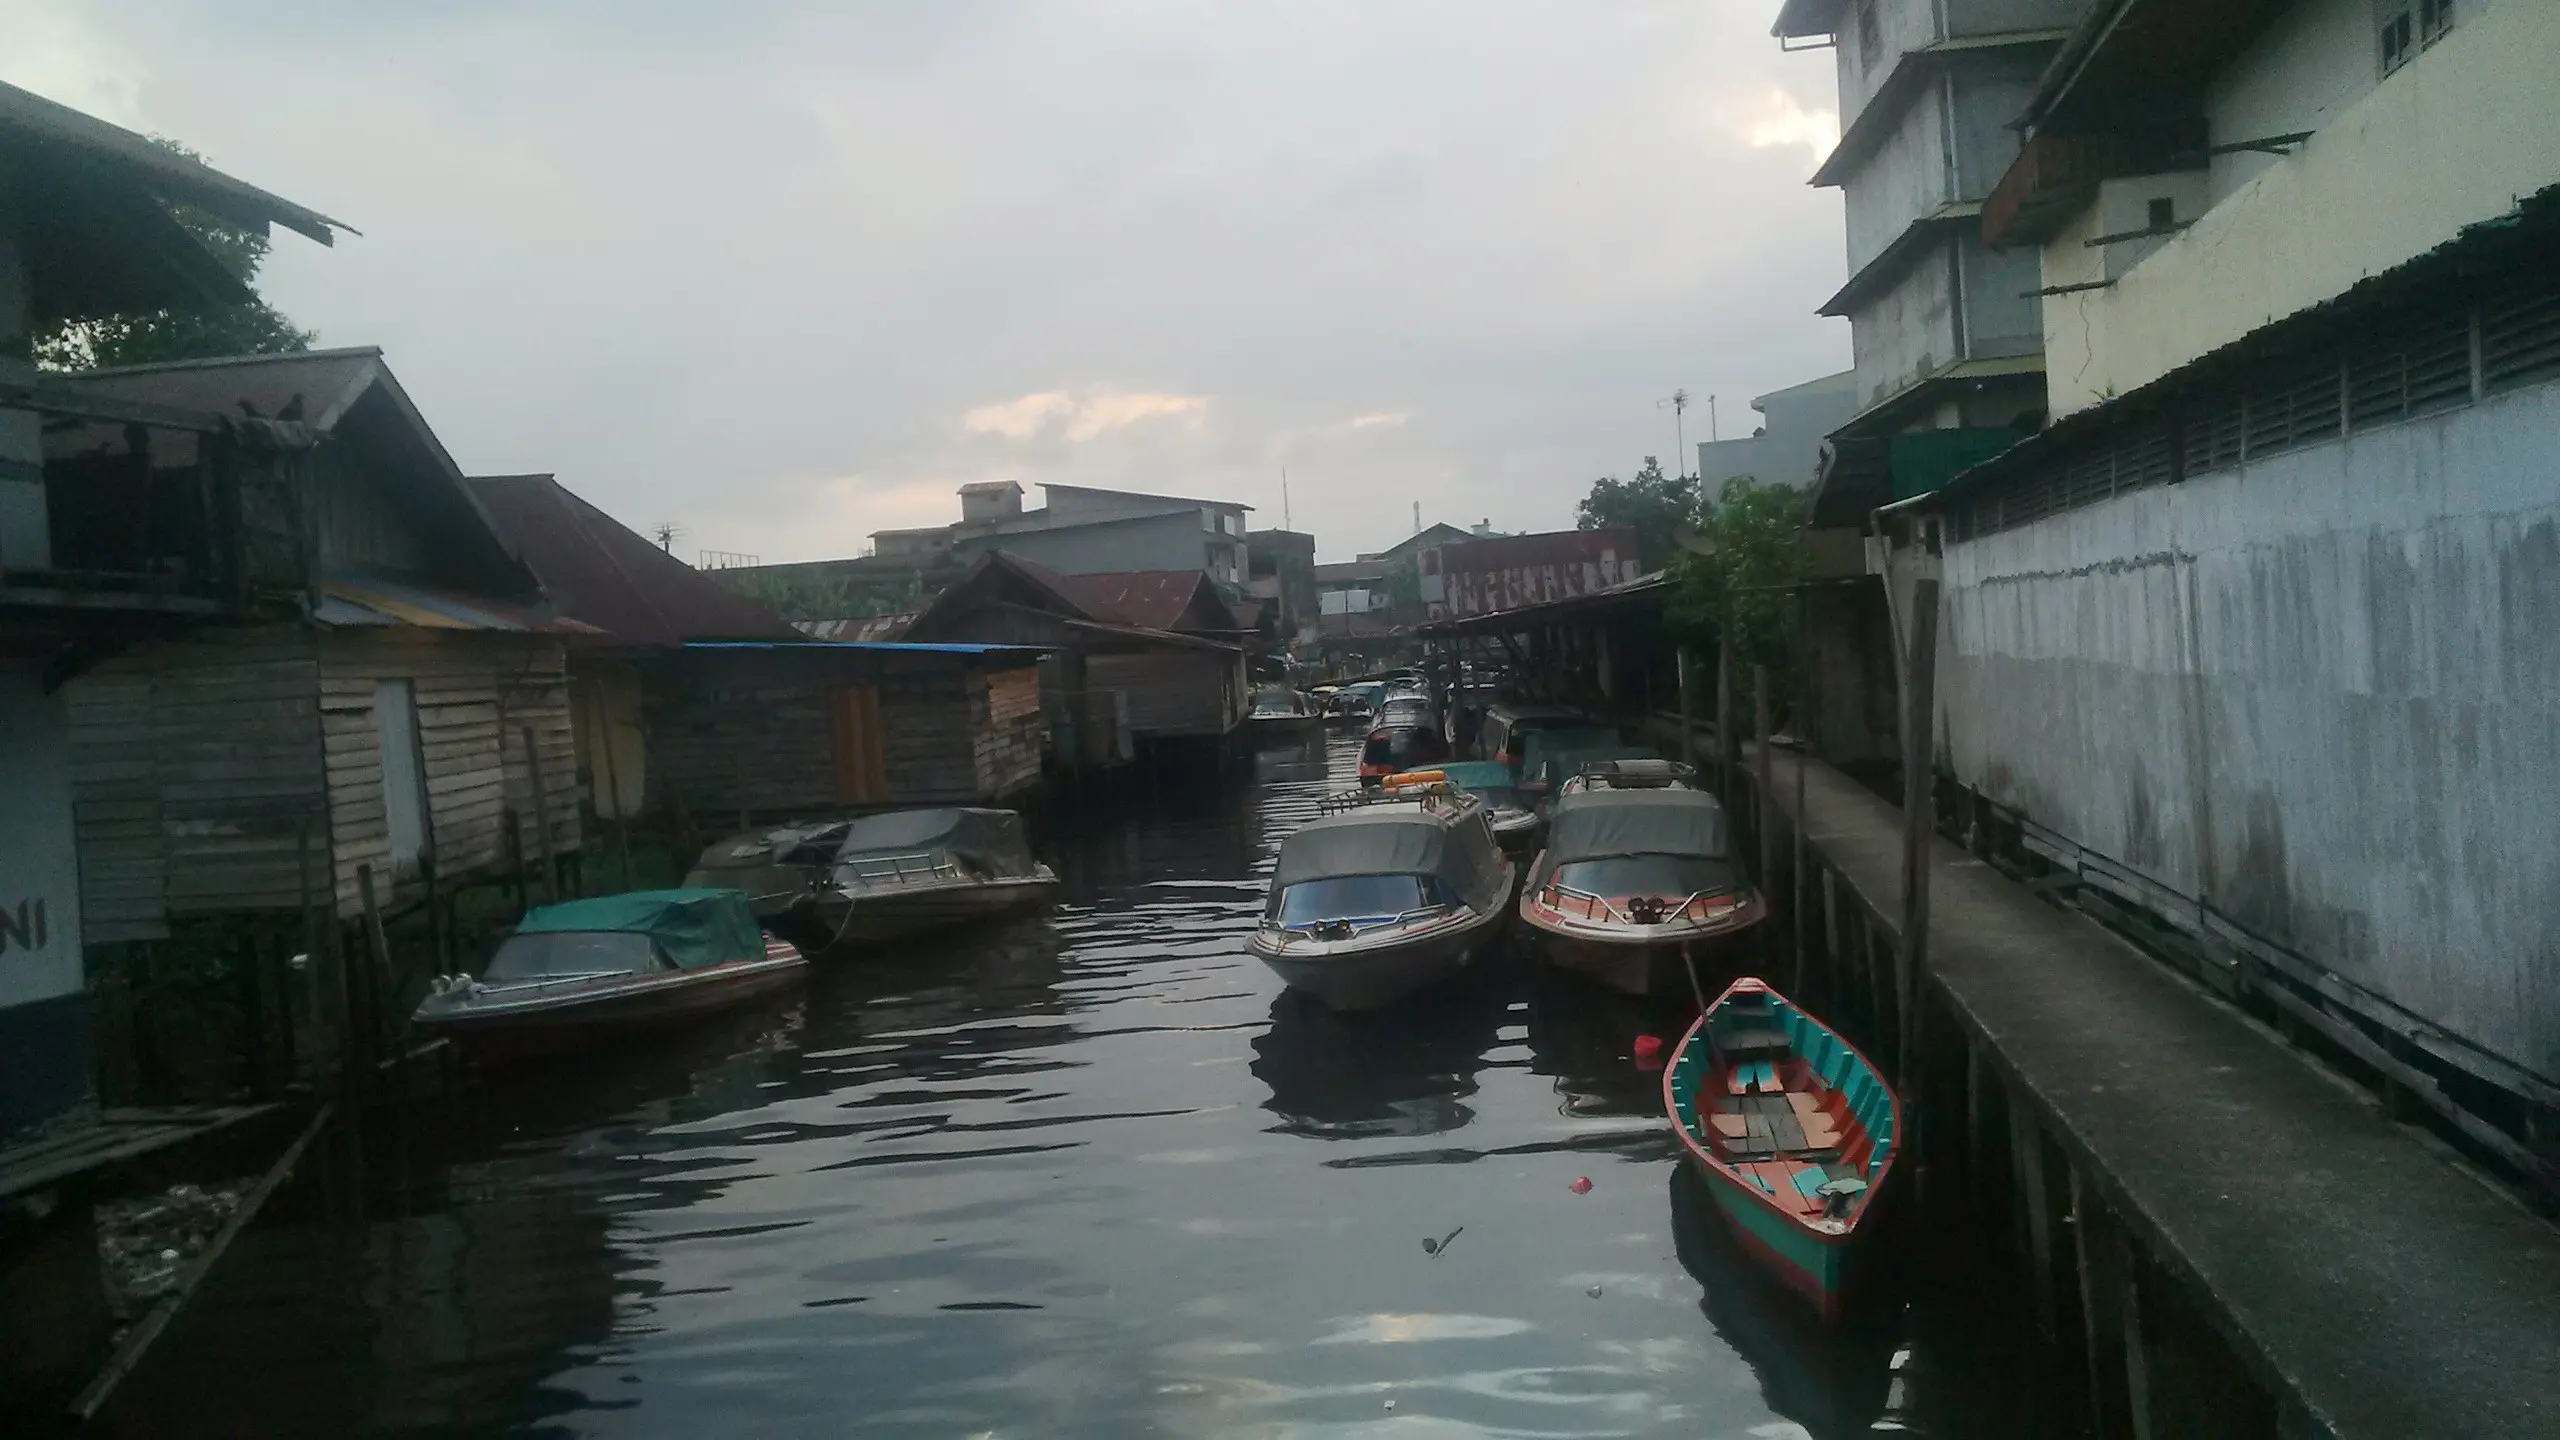 Suasana senja di bantaran Kapuas, sungai terpanjang di Indonesia, yang membelah Kota Pontianak, Kalimatan Barat. (Liputan6.com/Raden AMP)